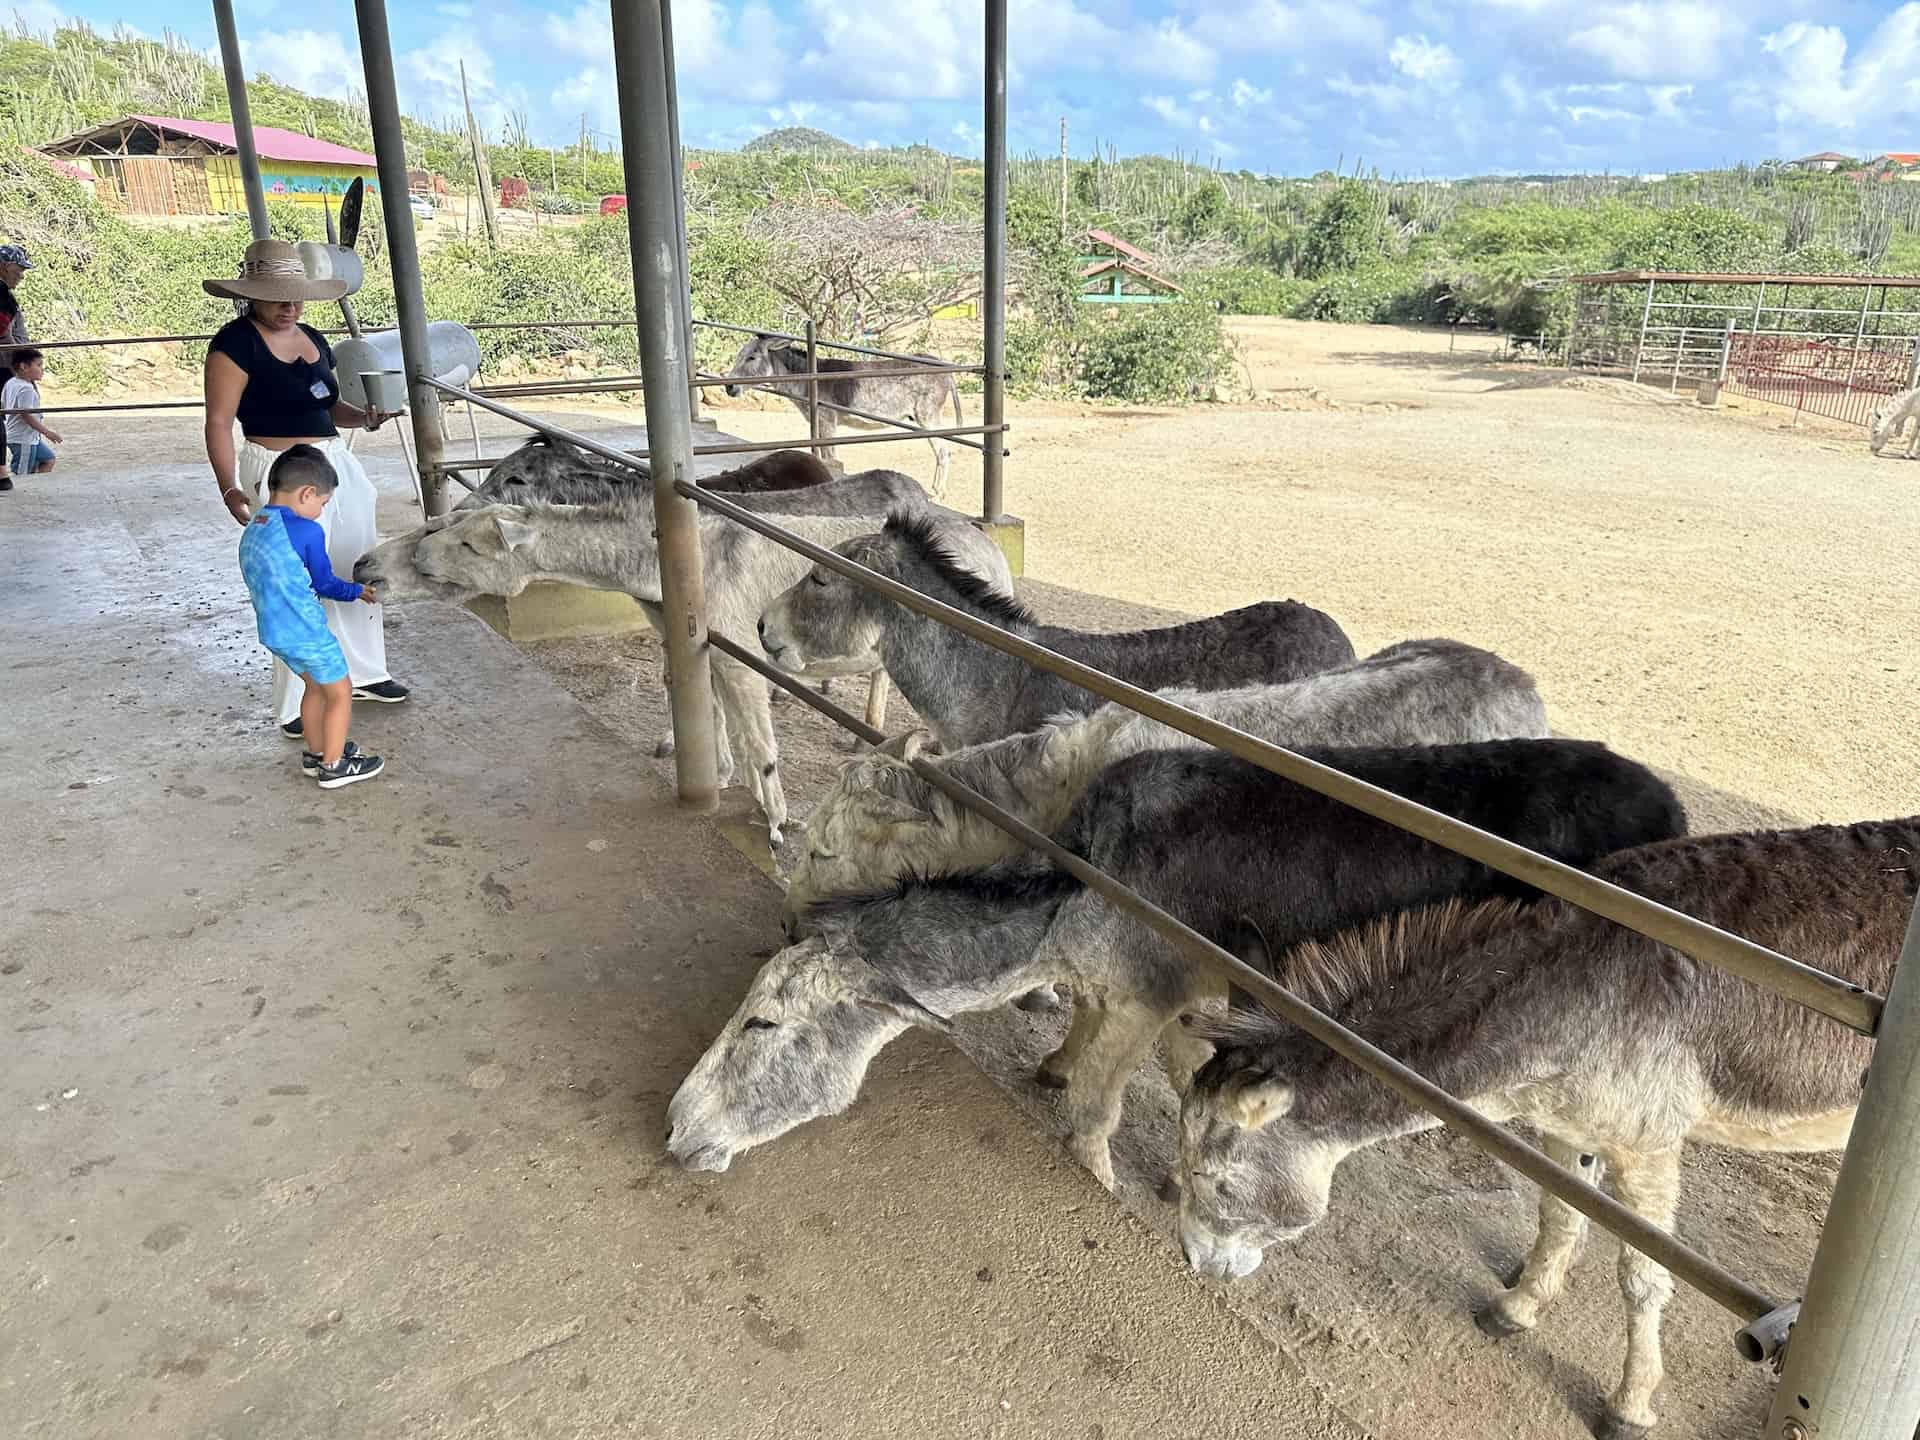 Porch at the Aruba Donkey Sanctuary in Santa Cruz, Aruba